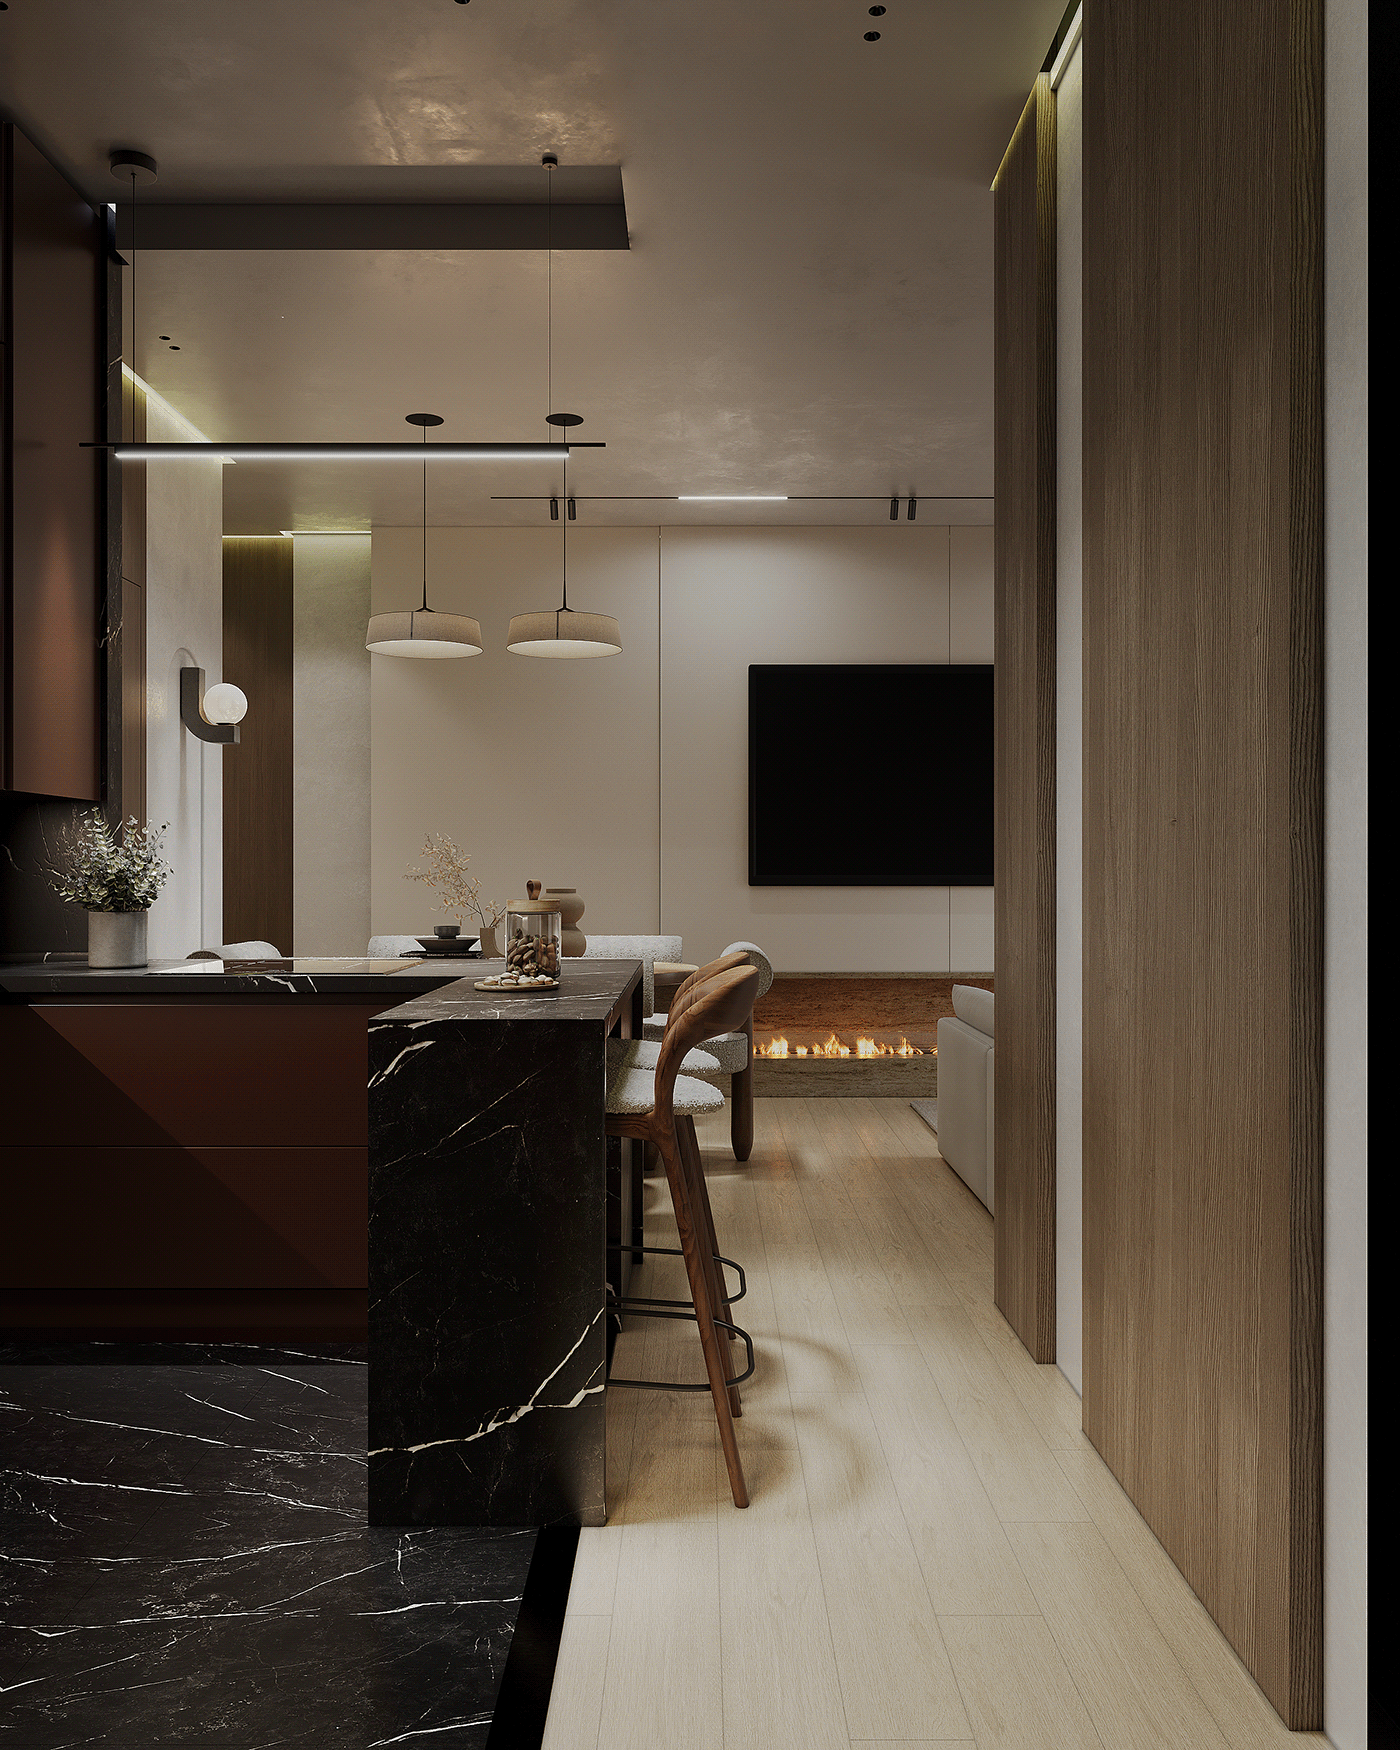 interior design  salon kitchen minimal bedroom dressing room dining dining room living room visualization